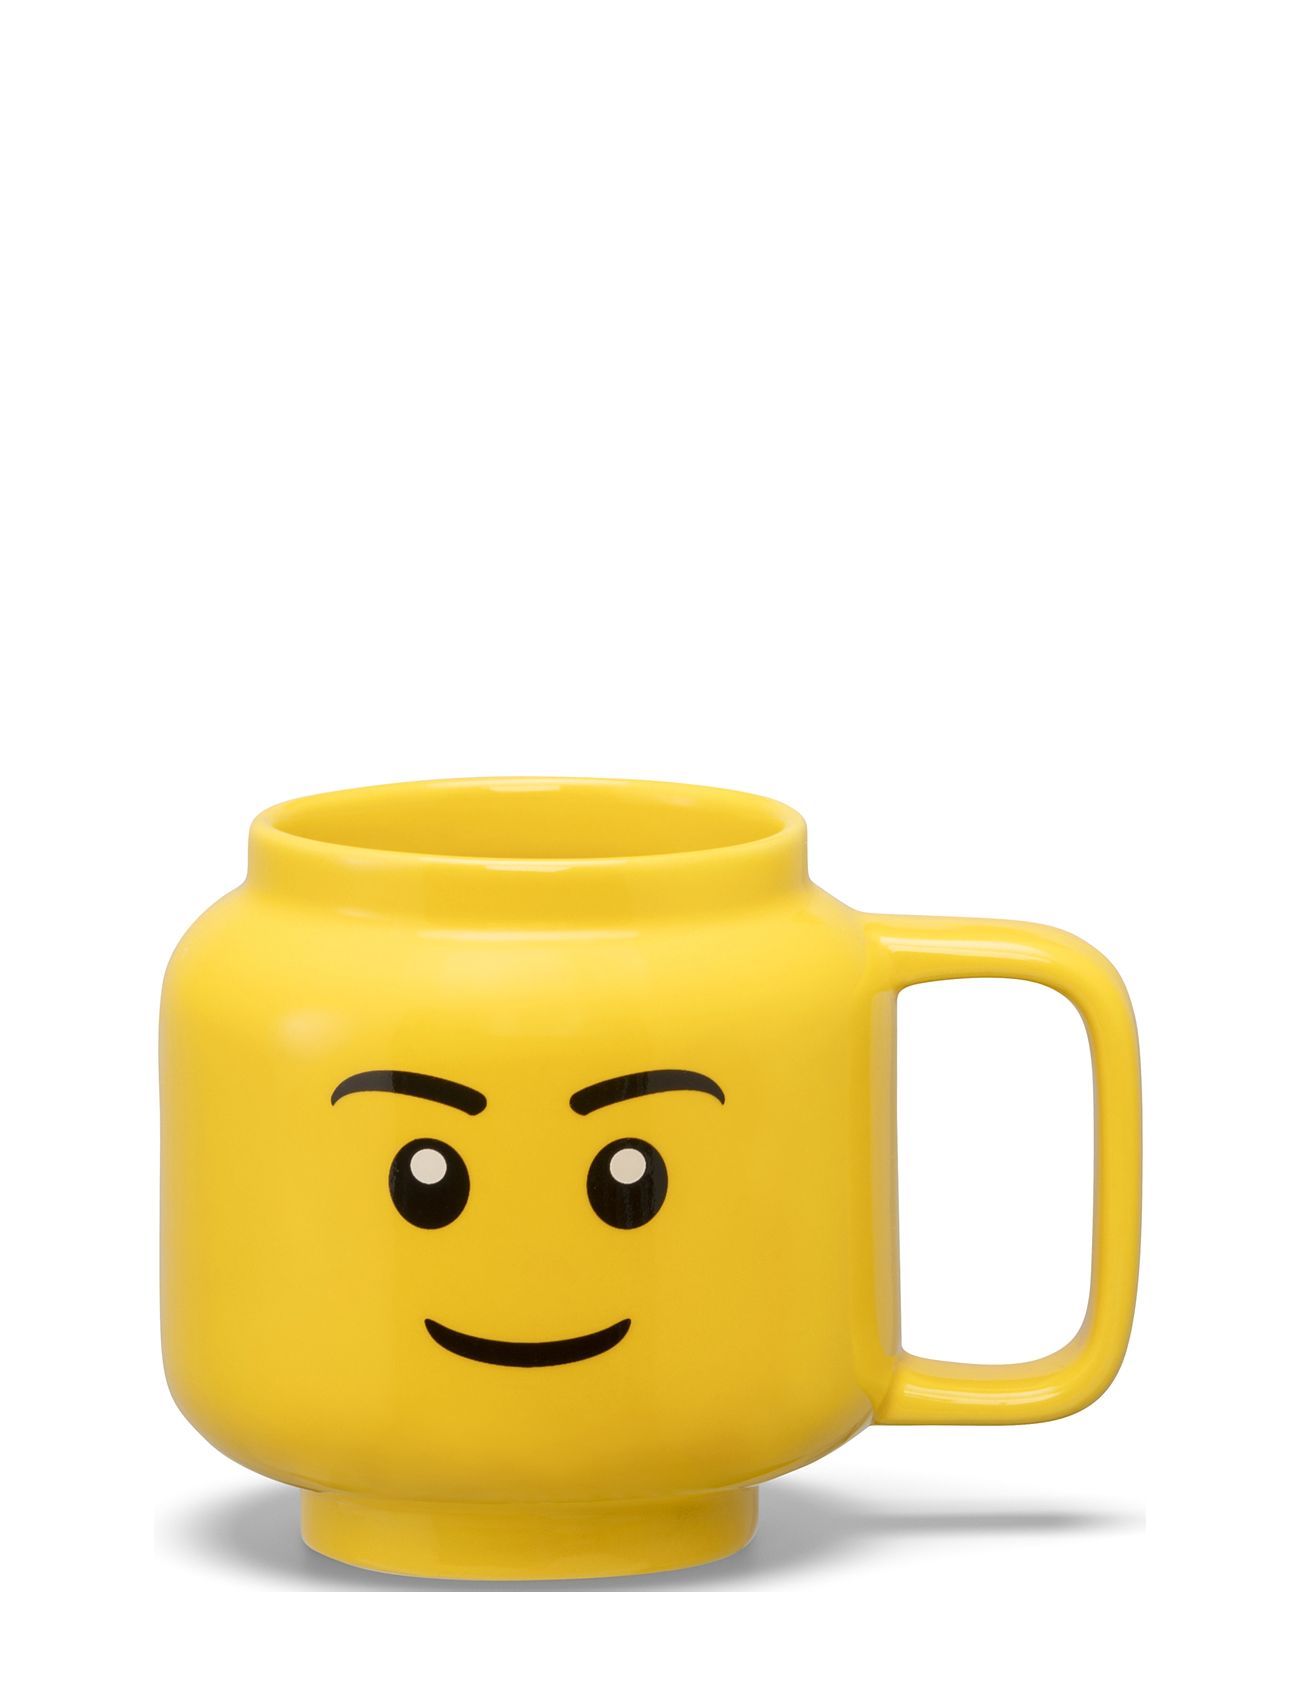 Lego Ceramic Mug Small Boy Home Meal Time Cups & Mugs Cups Yellow LEGO STORAGE